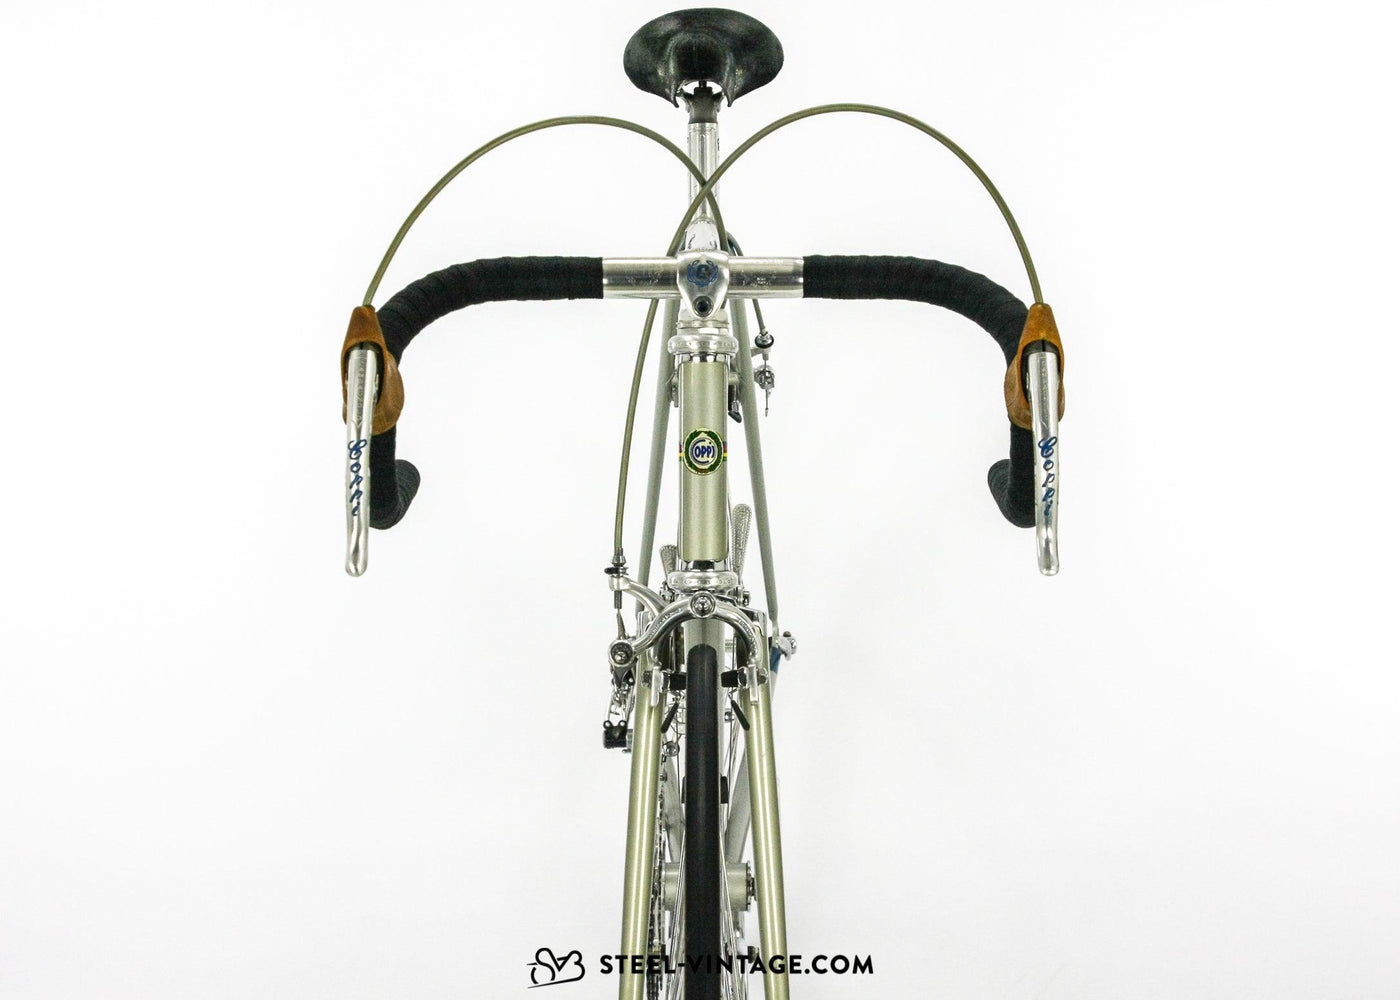 Fausto Coppi Campionissimo Classic Road Bike 1970s - Steel Vintage Bikes